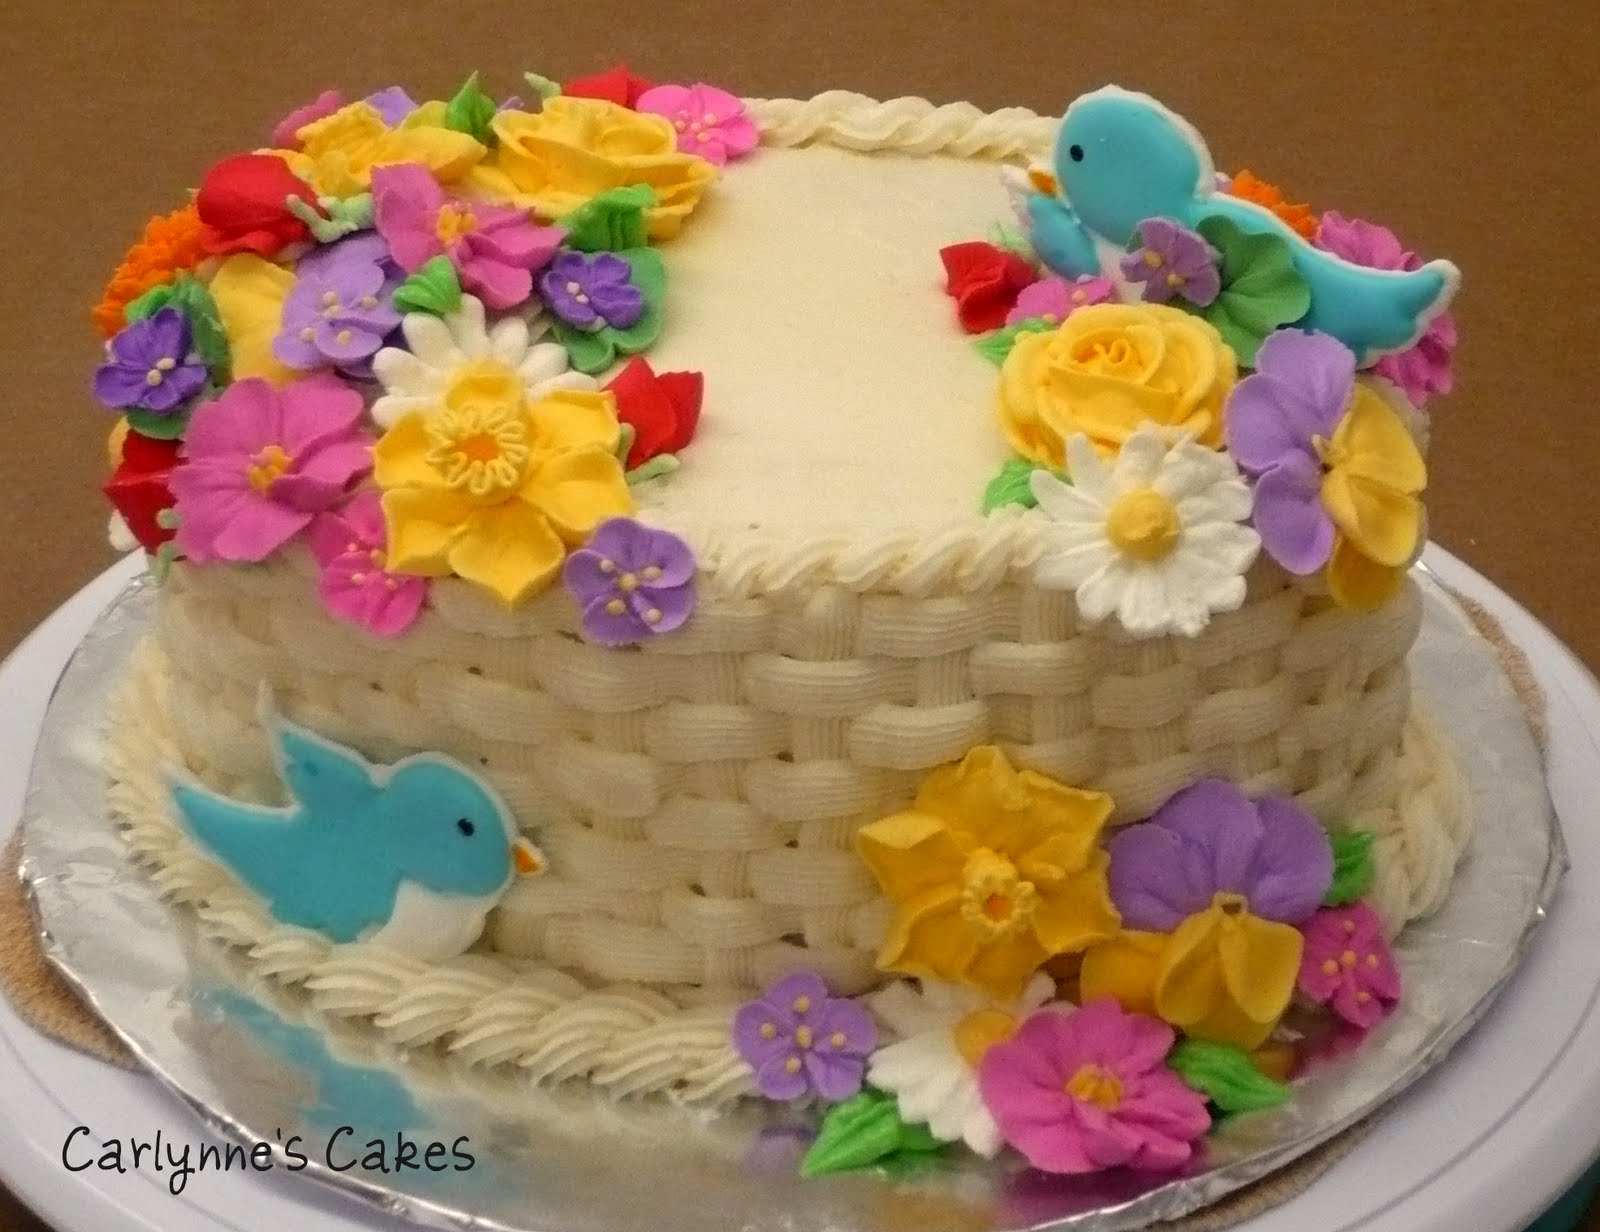 Carlynnes Cakes Spring Cake